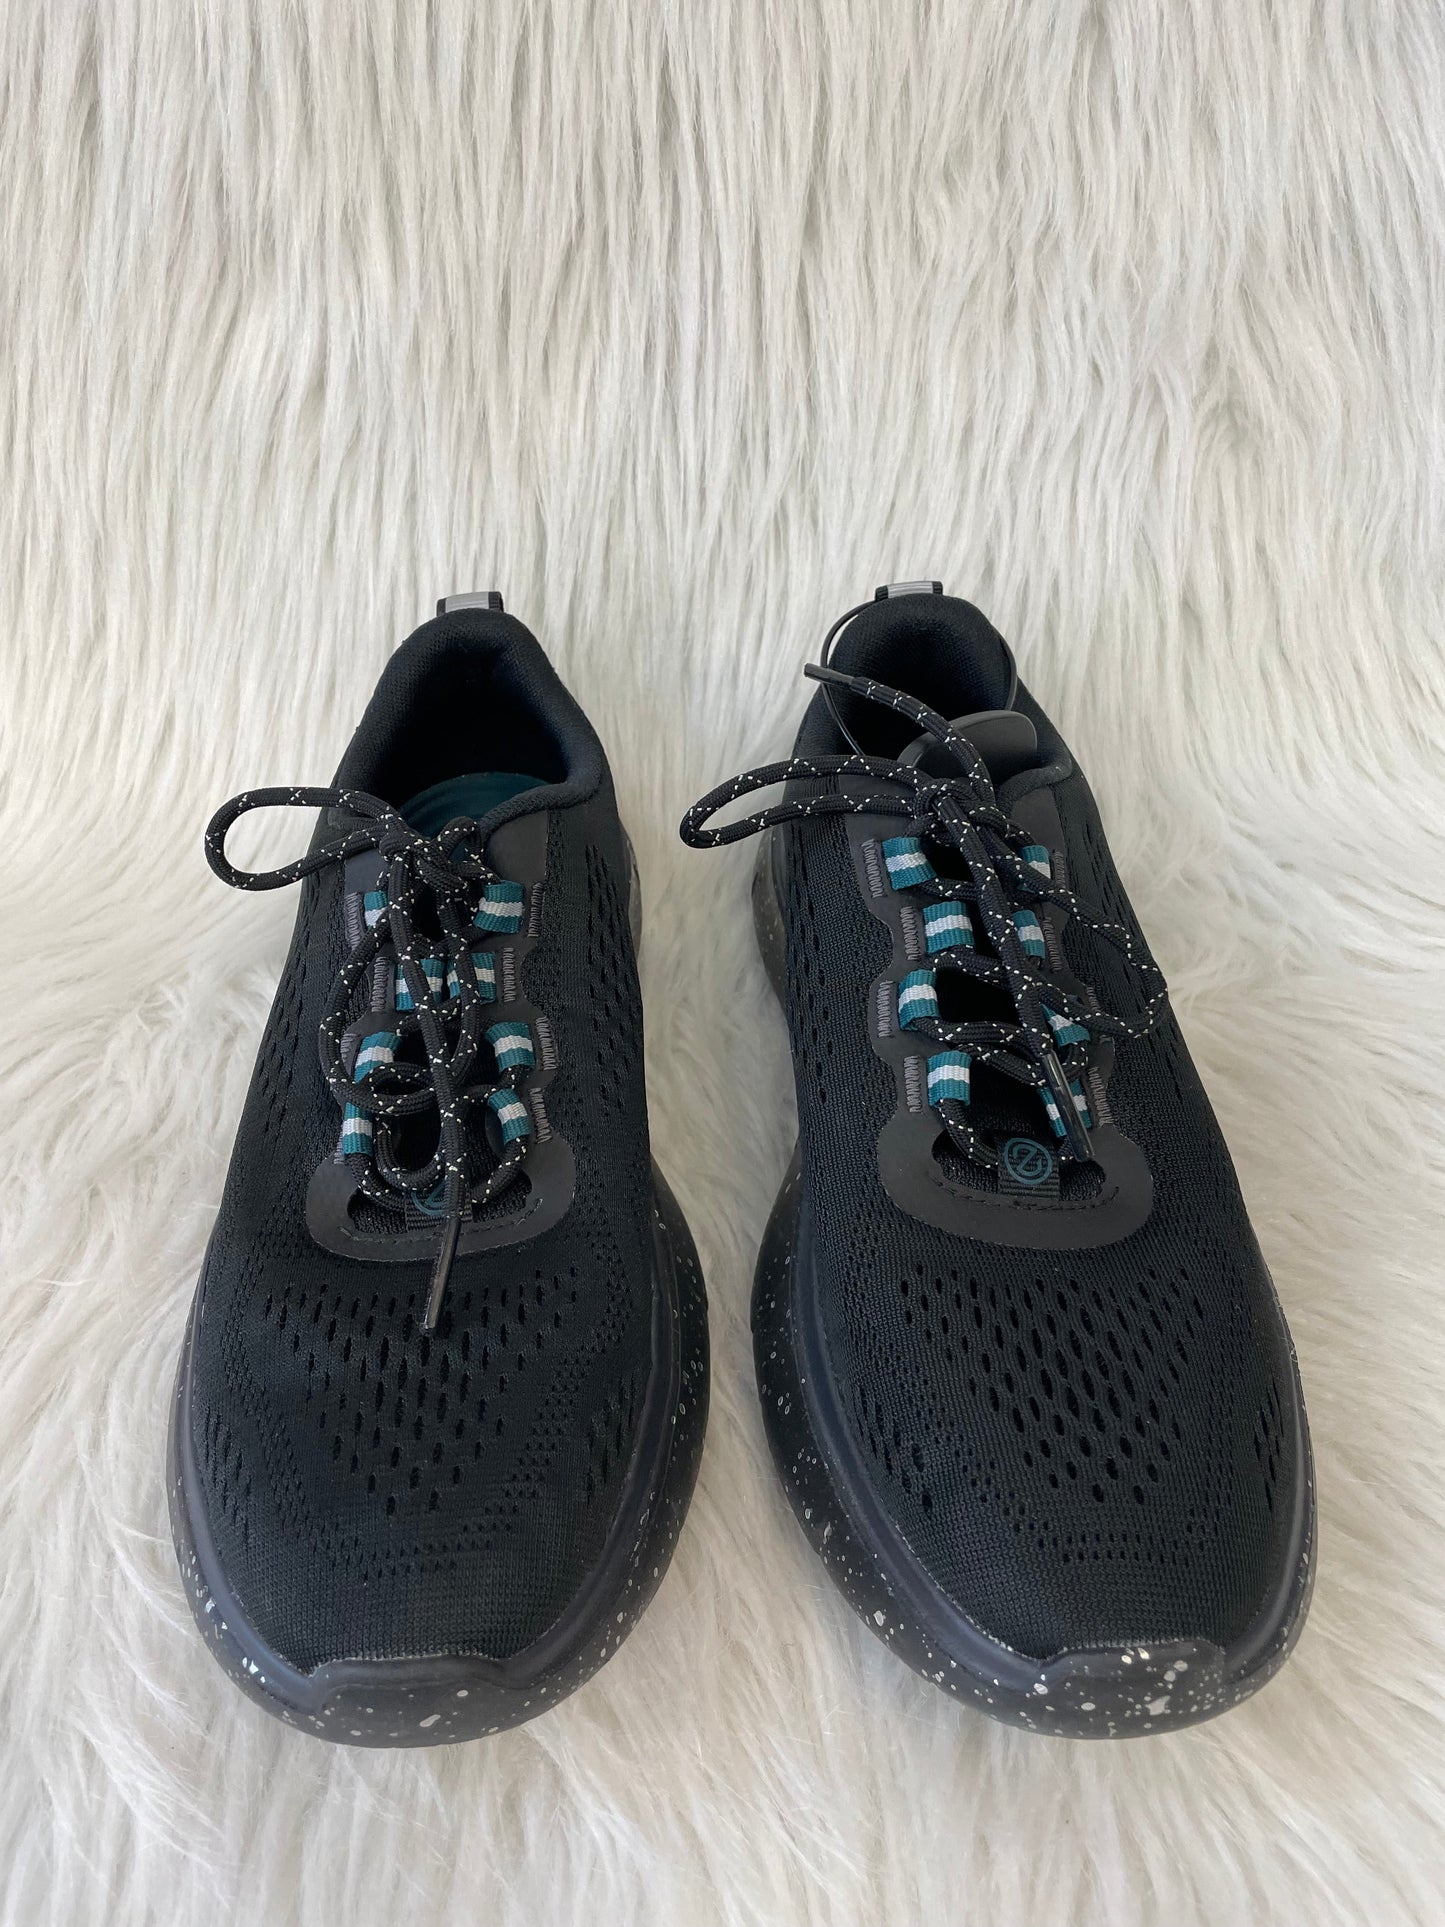 Black Shoes Athletic Cole-haan, Size 7.5